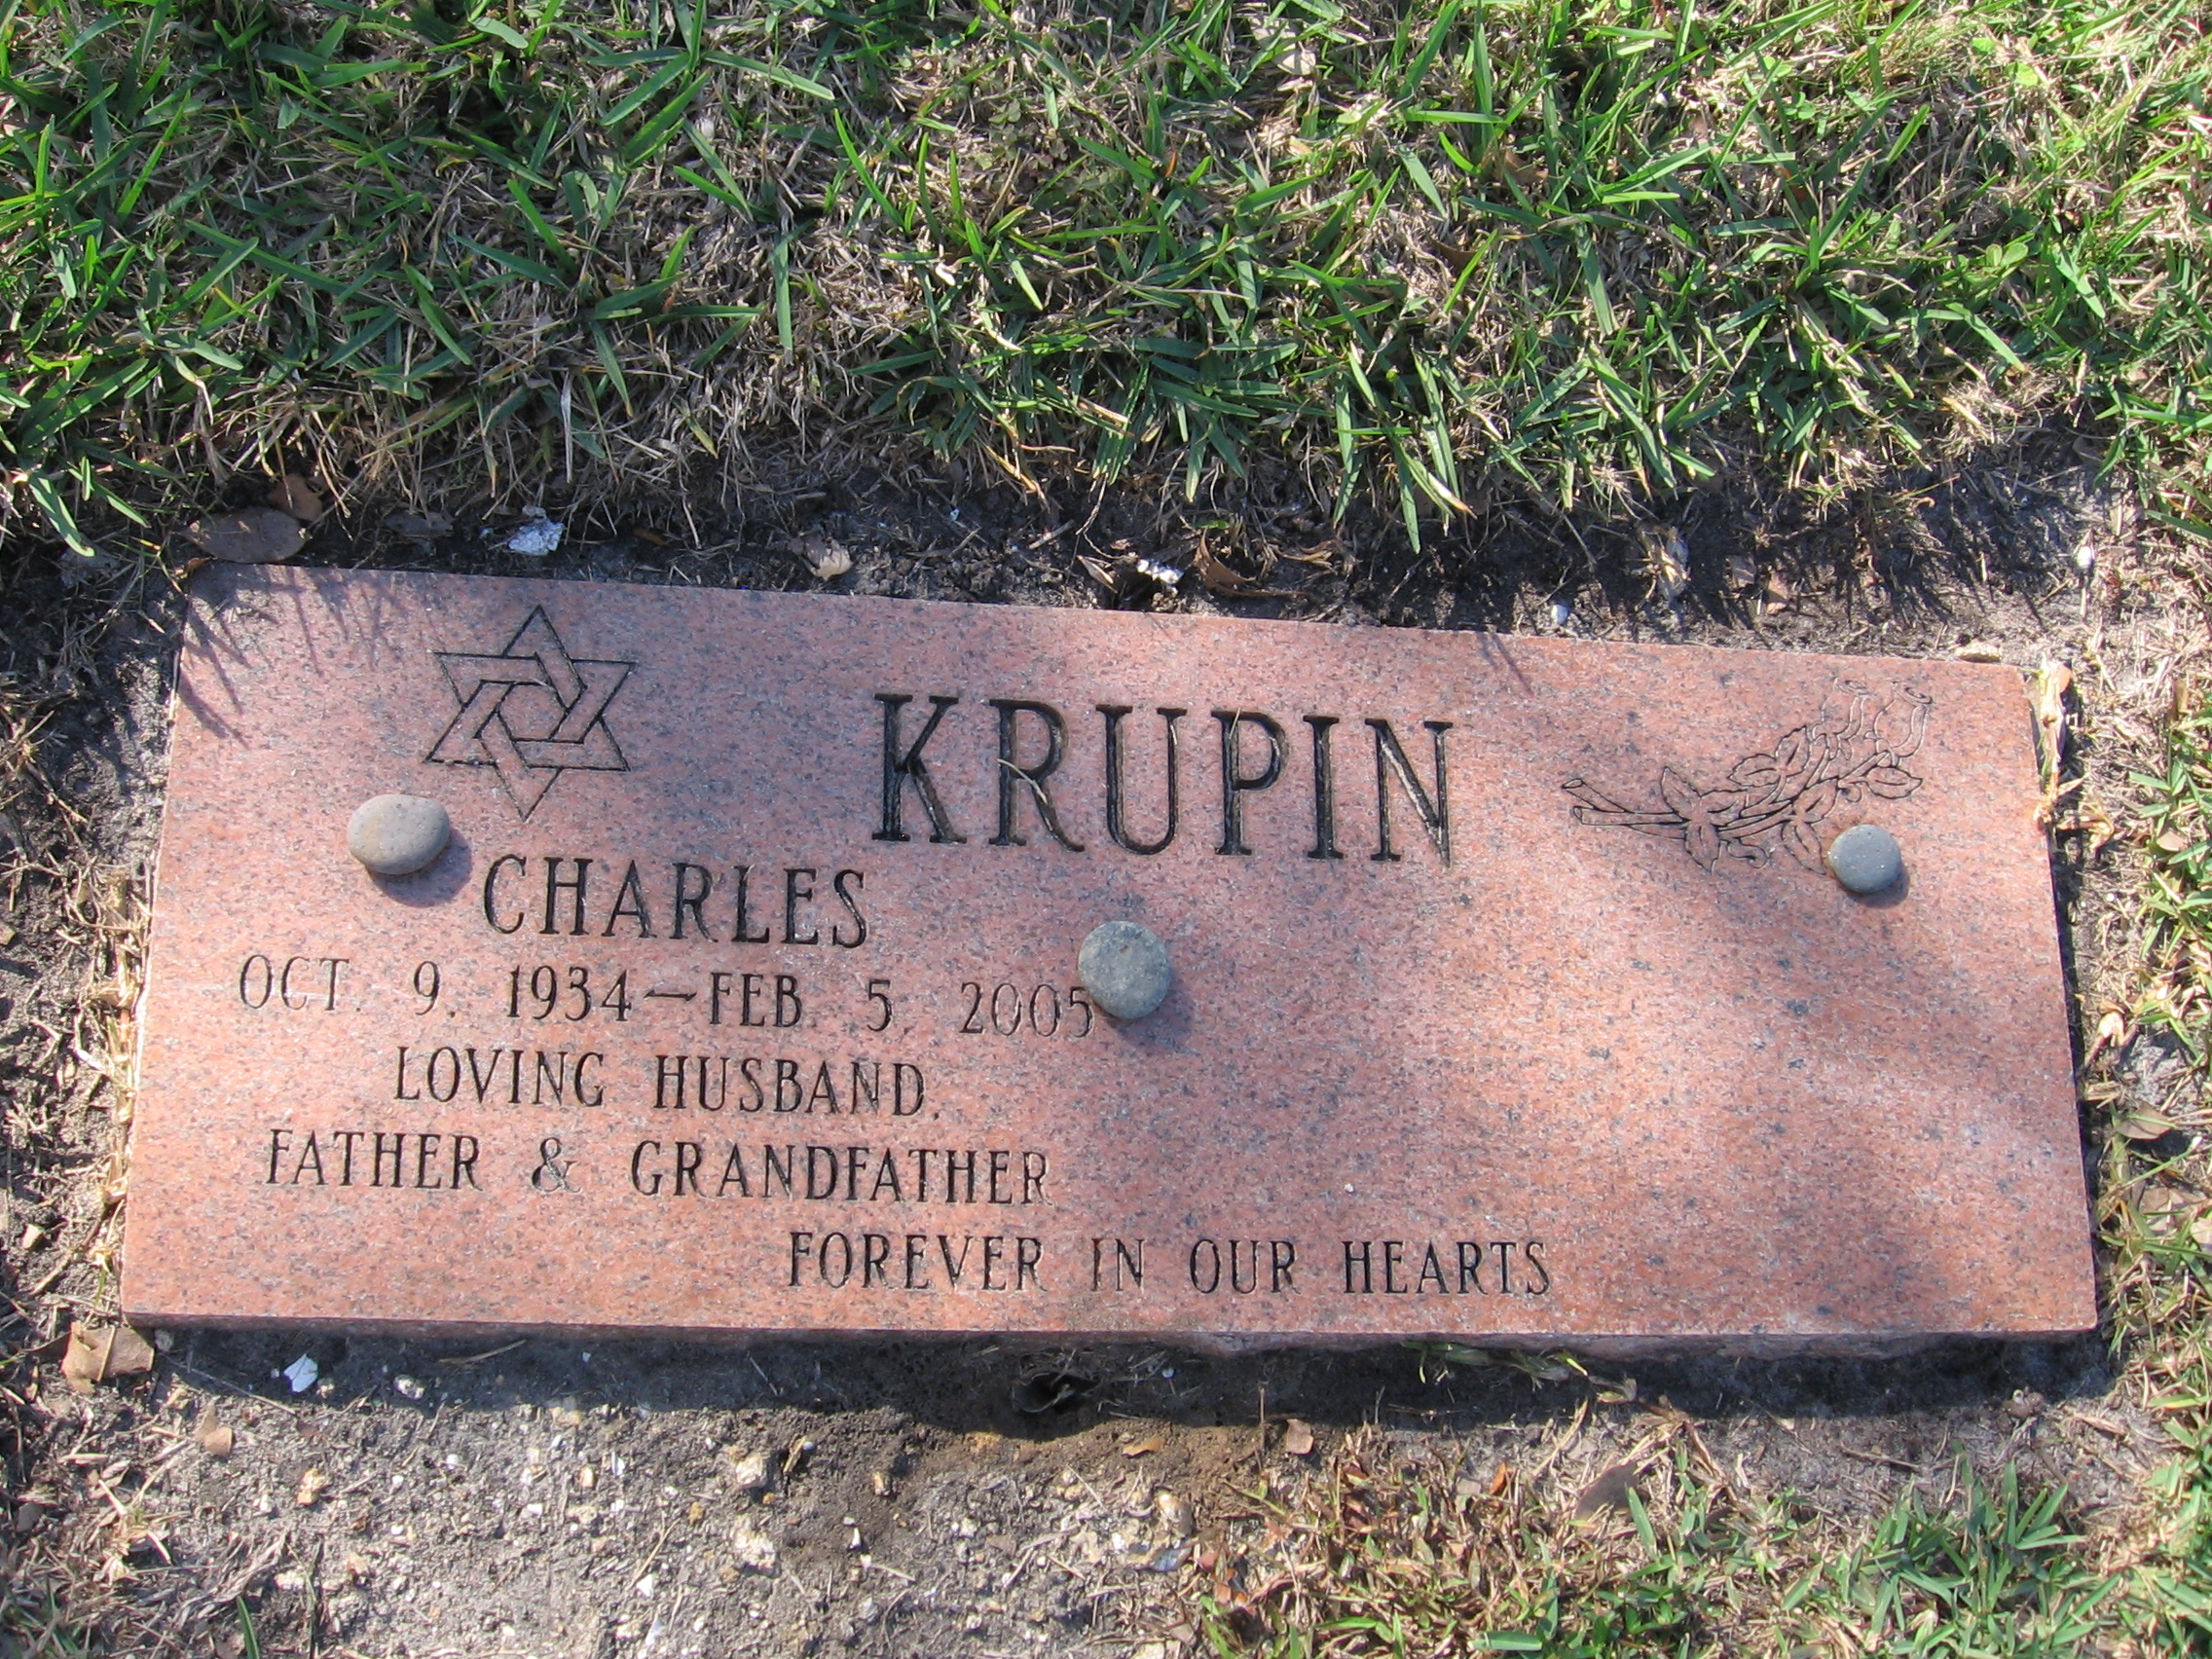 Charles Krupin